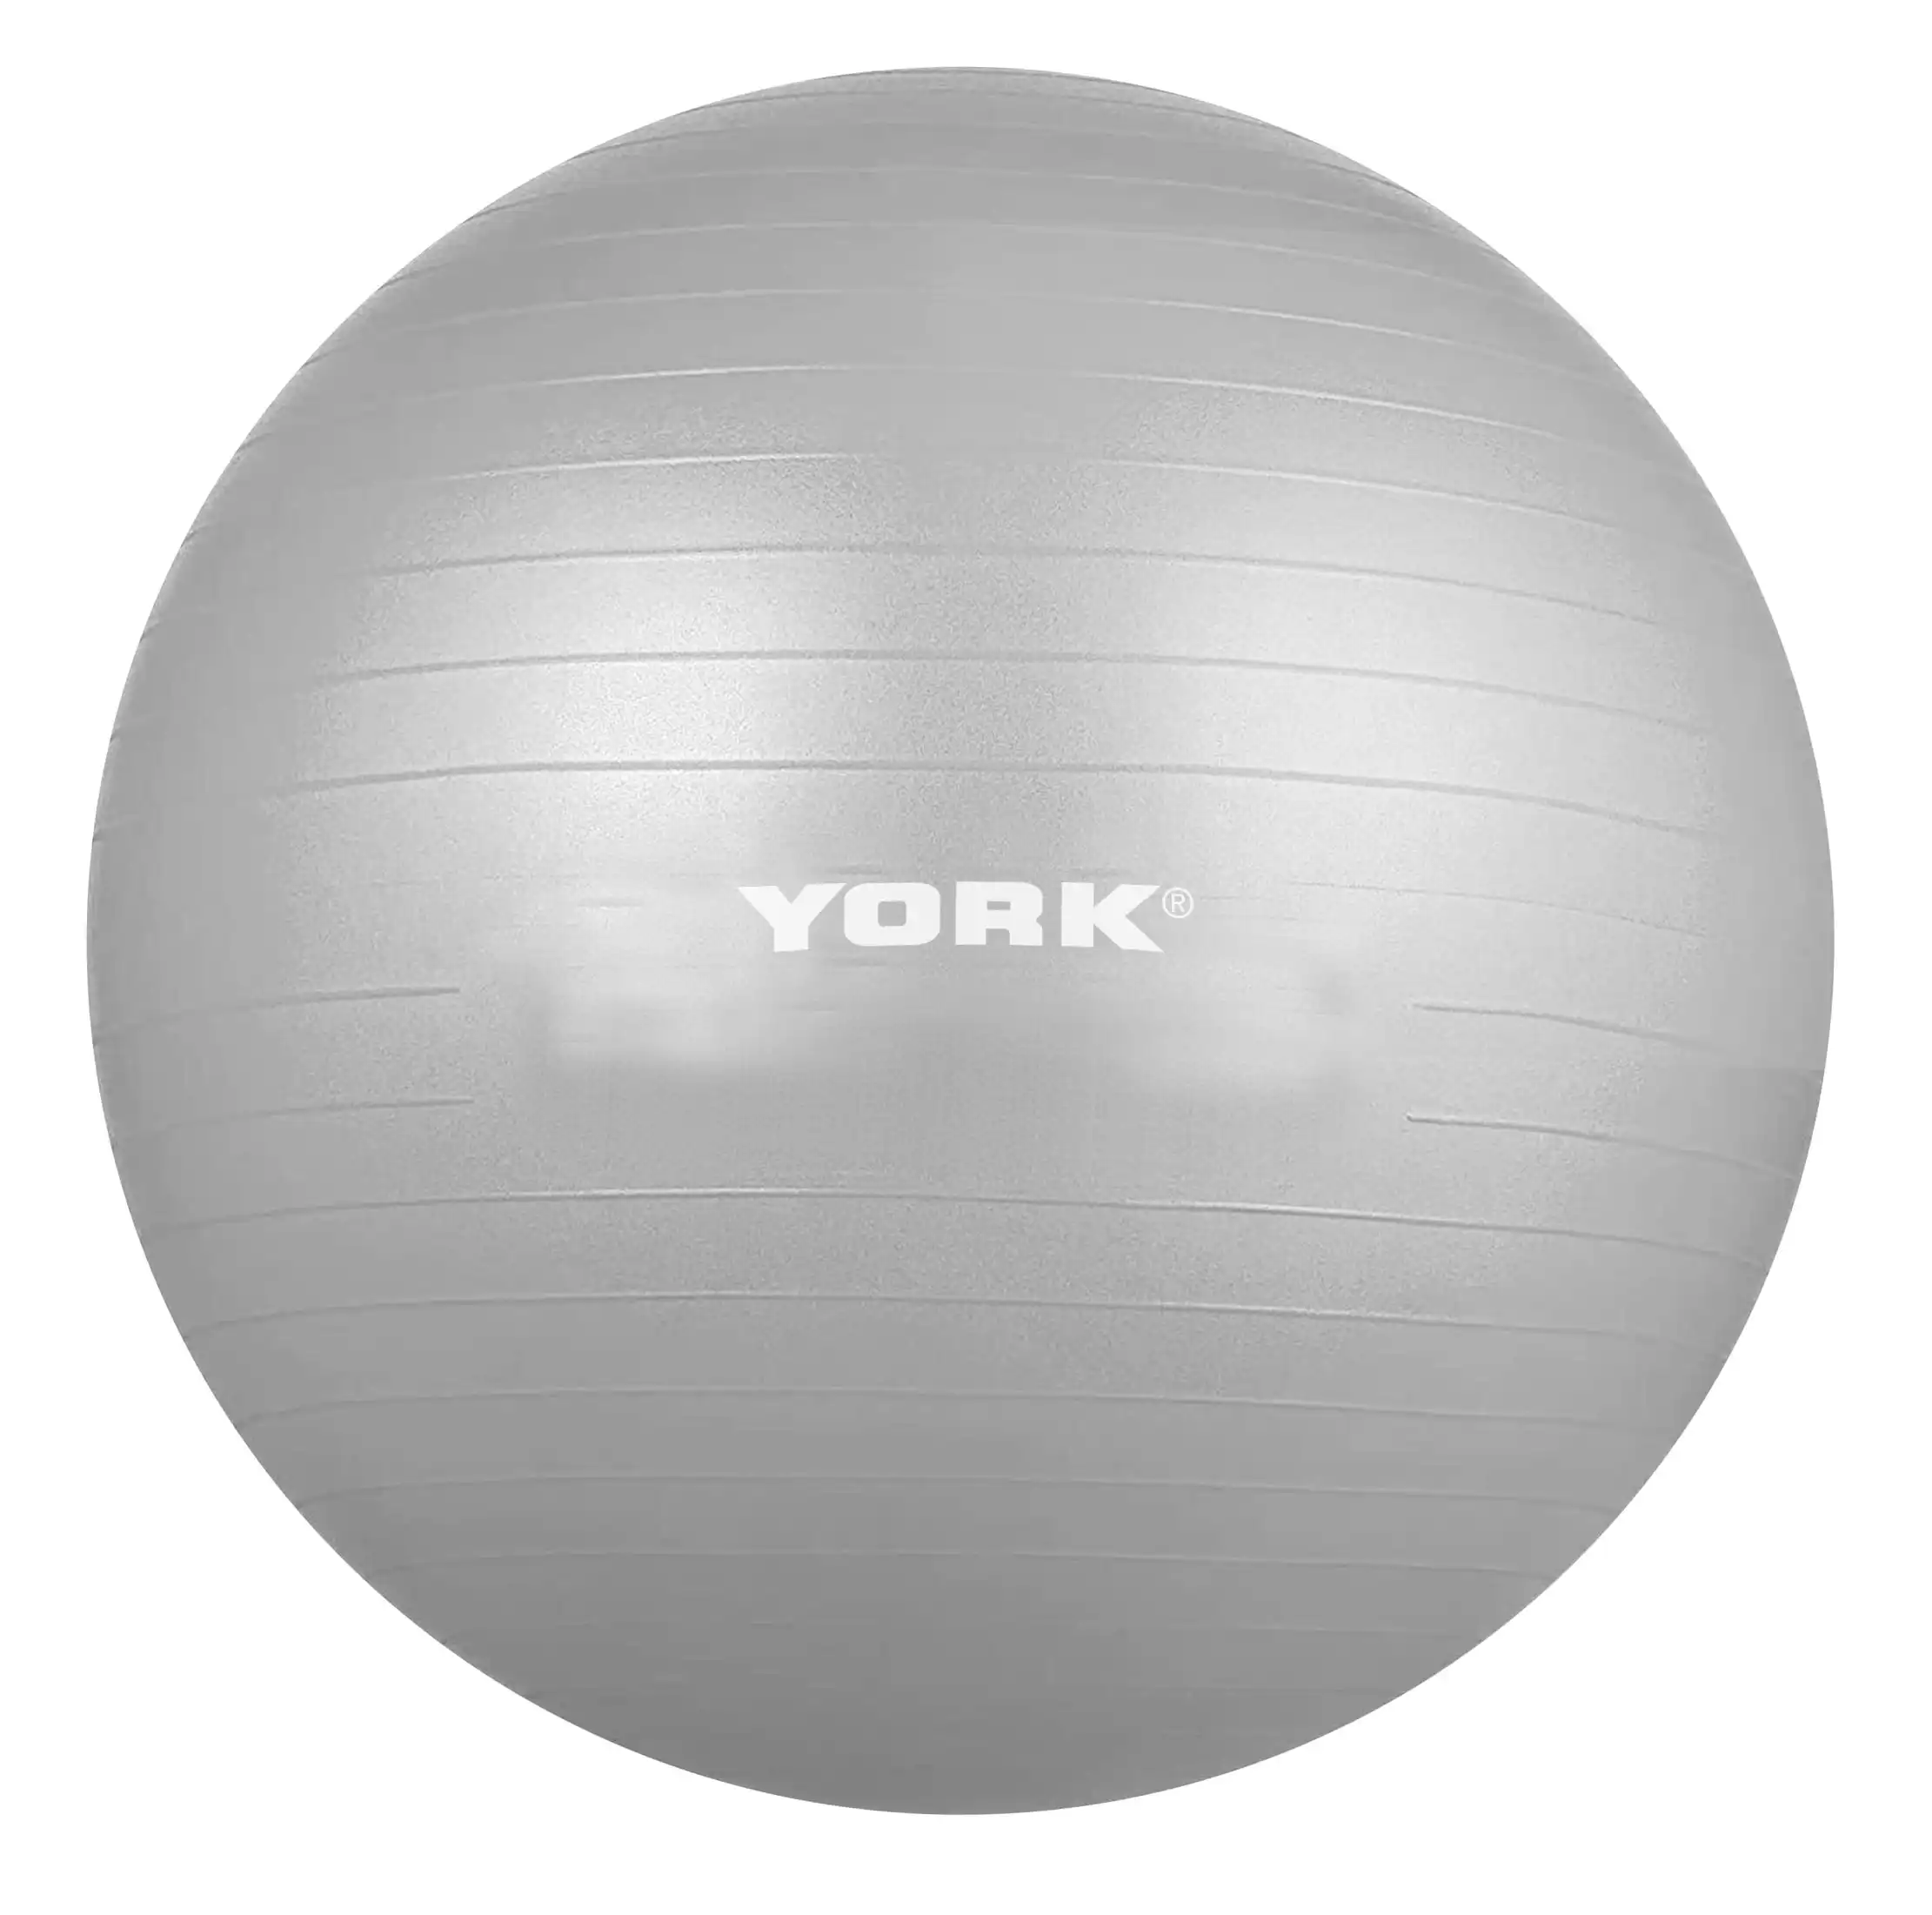 York Fitness Gym Ball 75cm